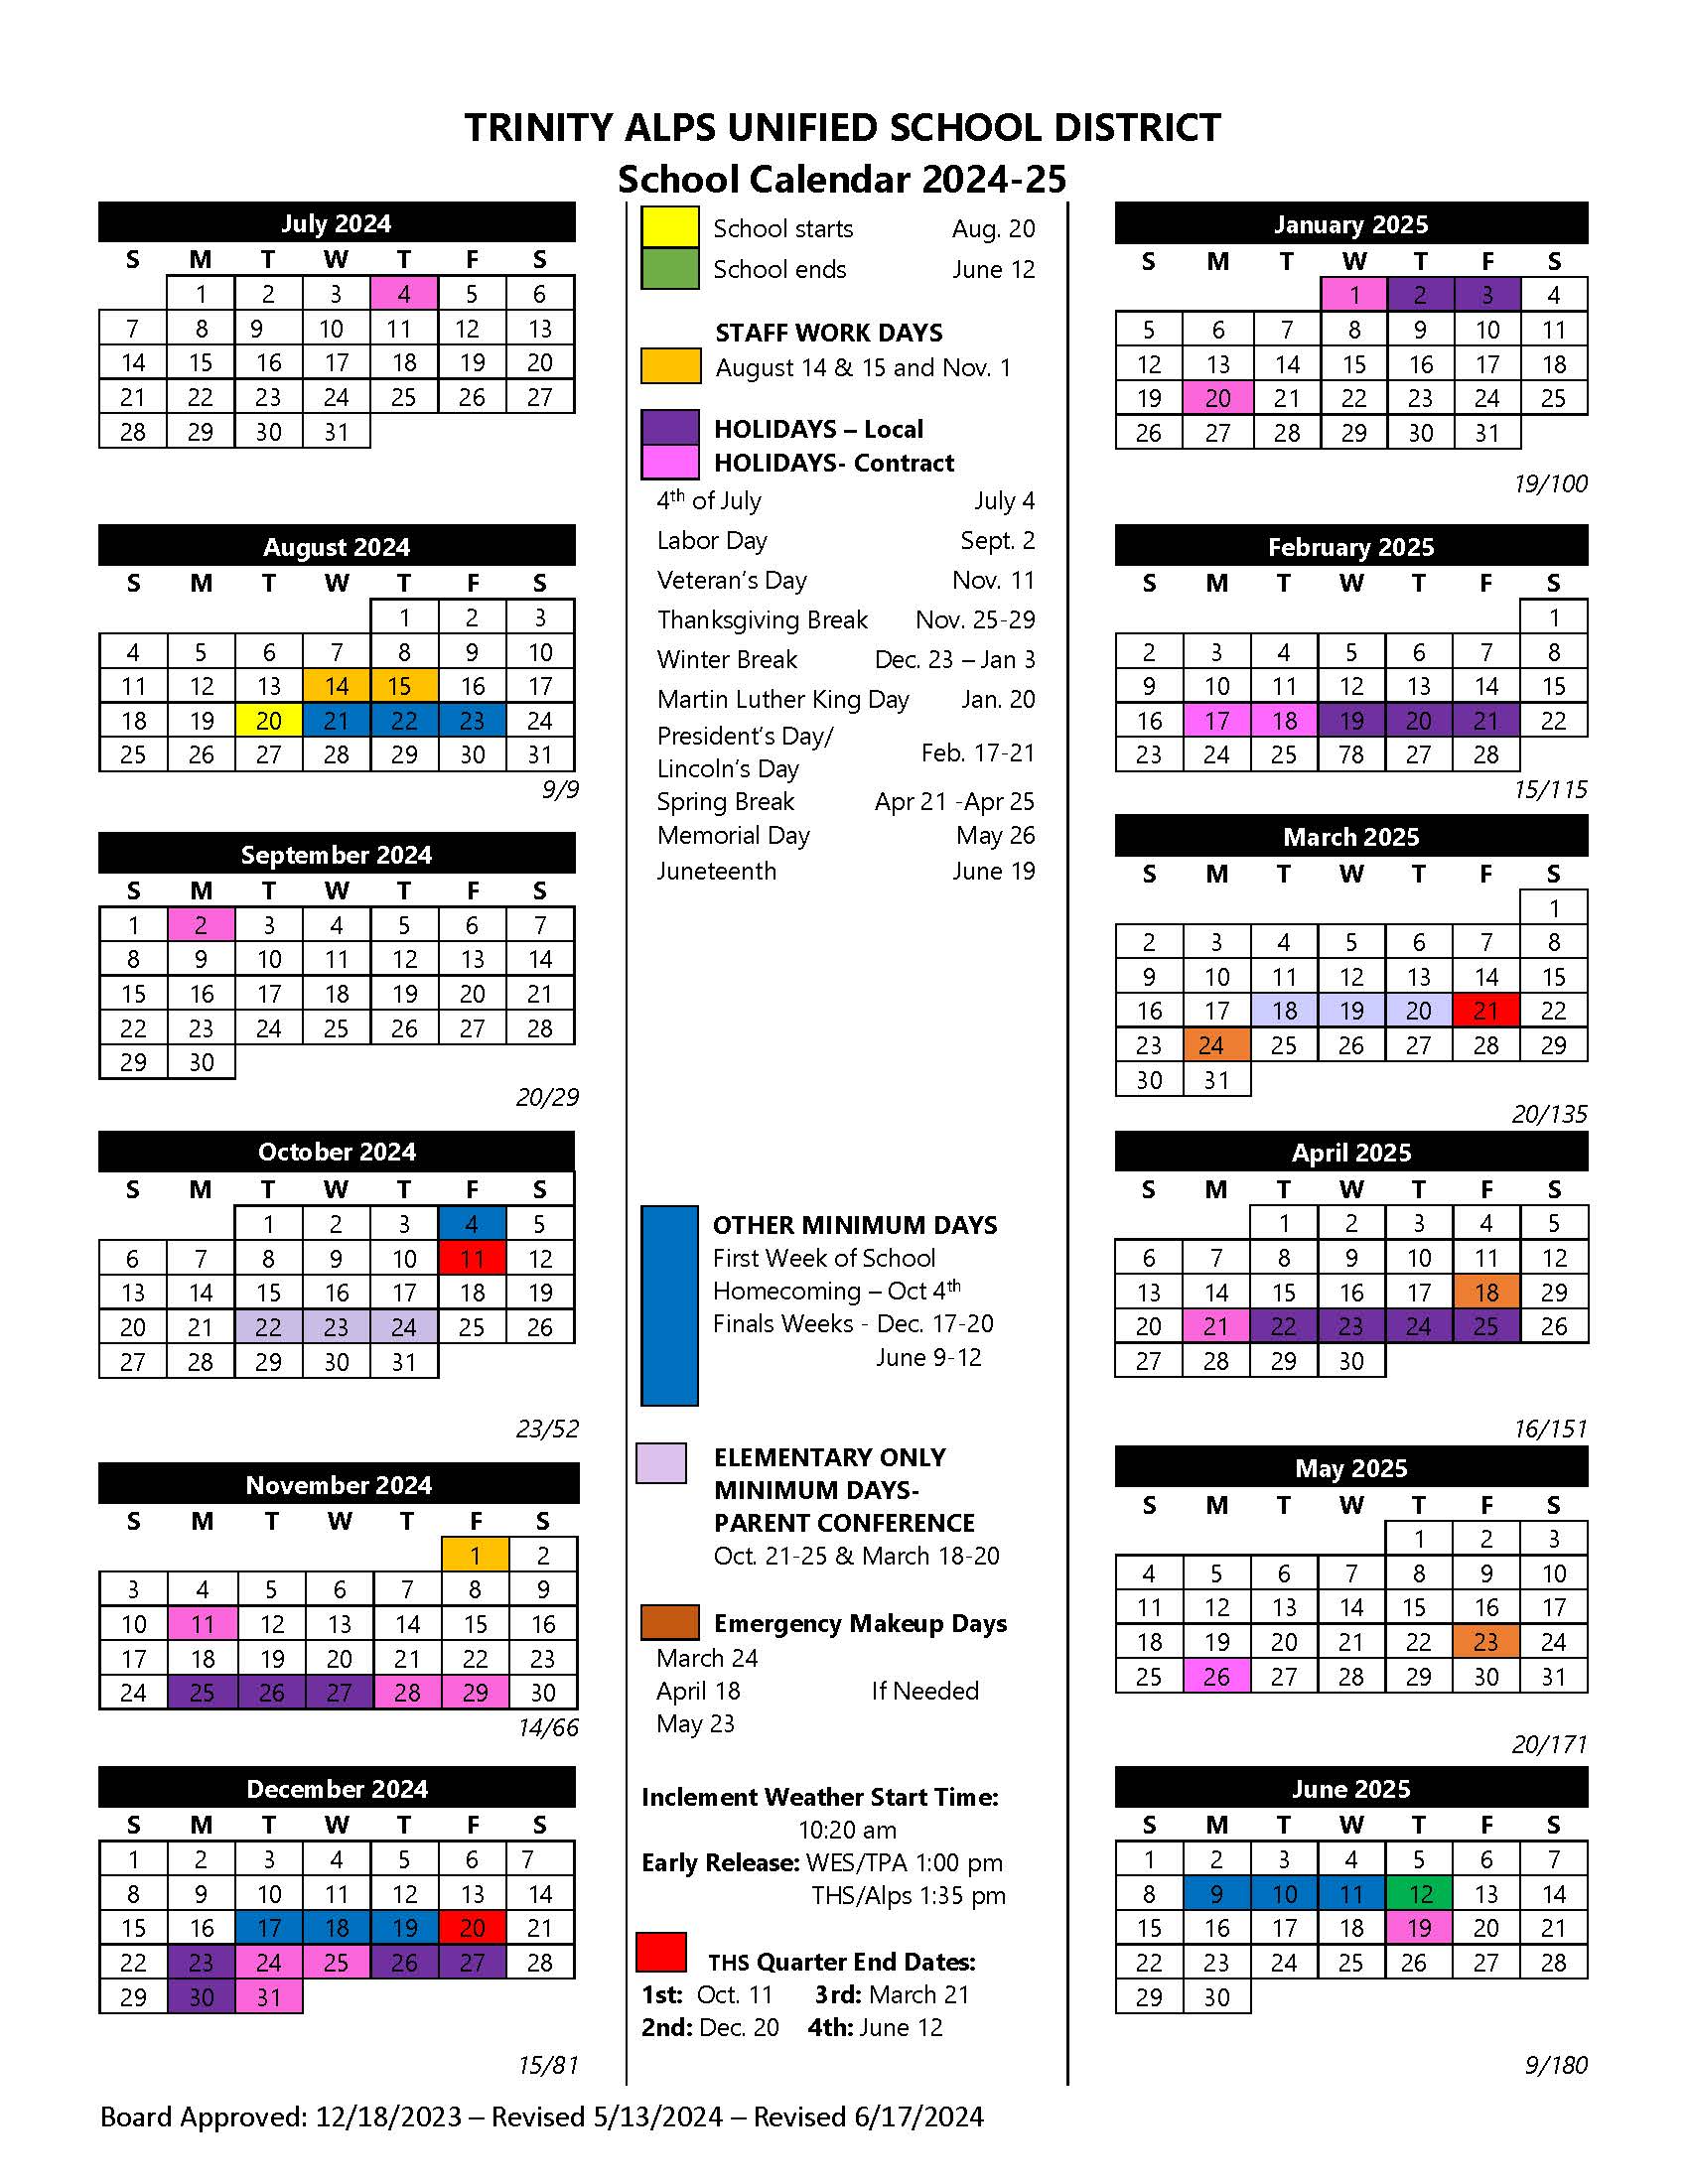 TAUSD School Calendar 